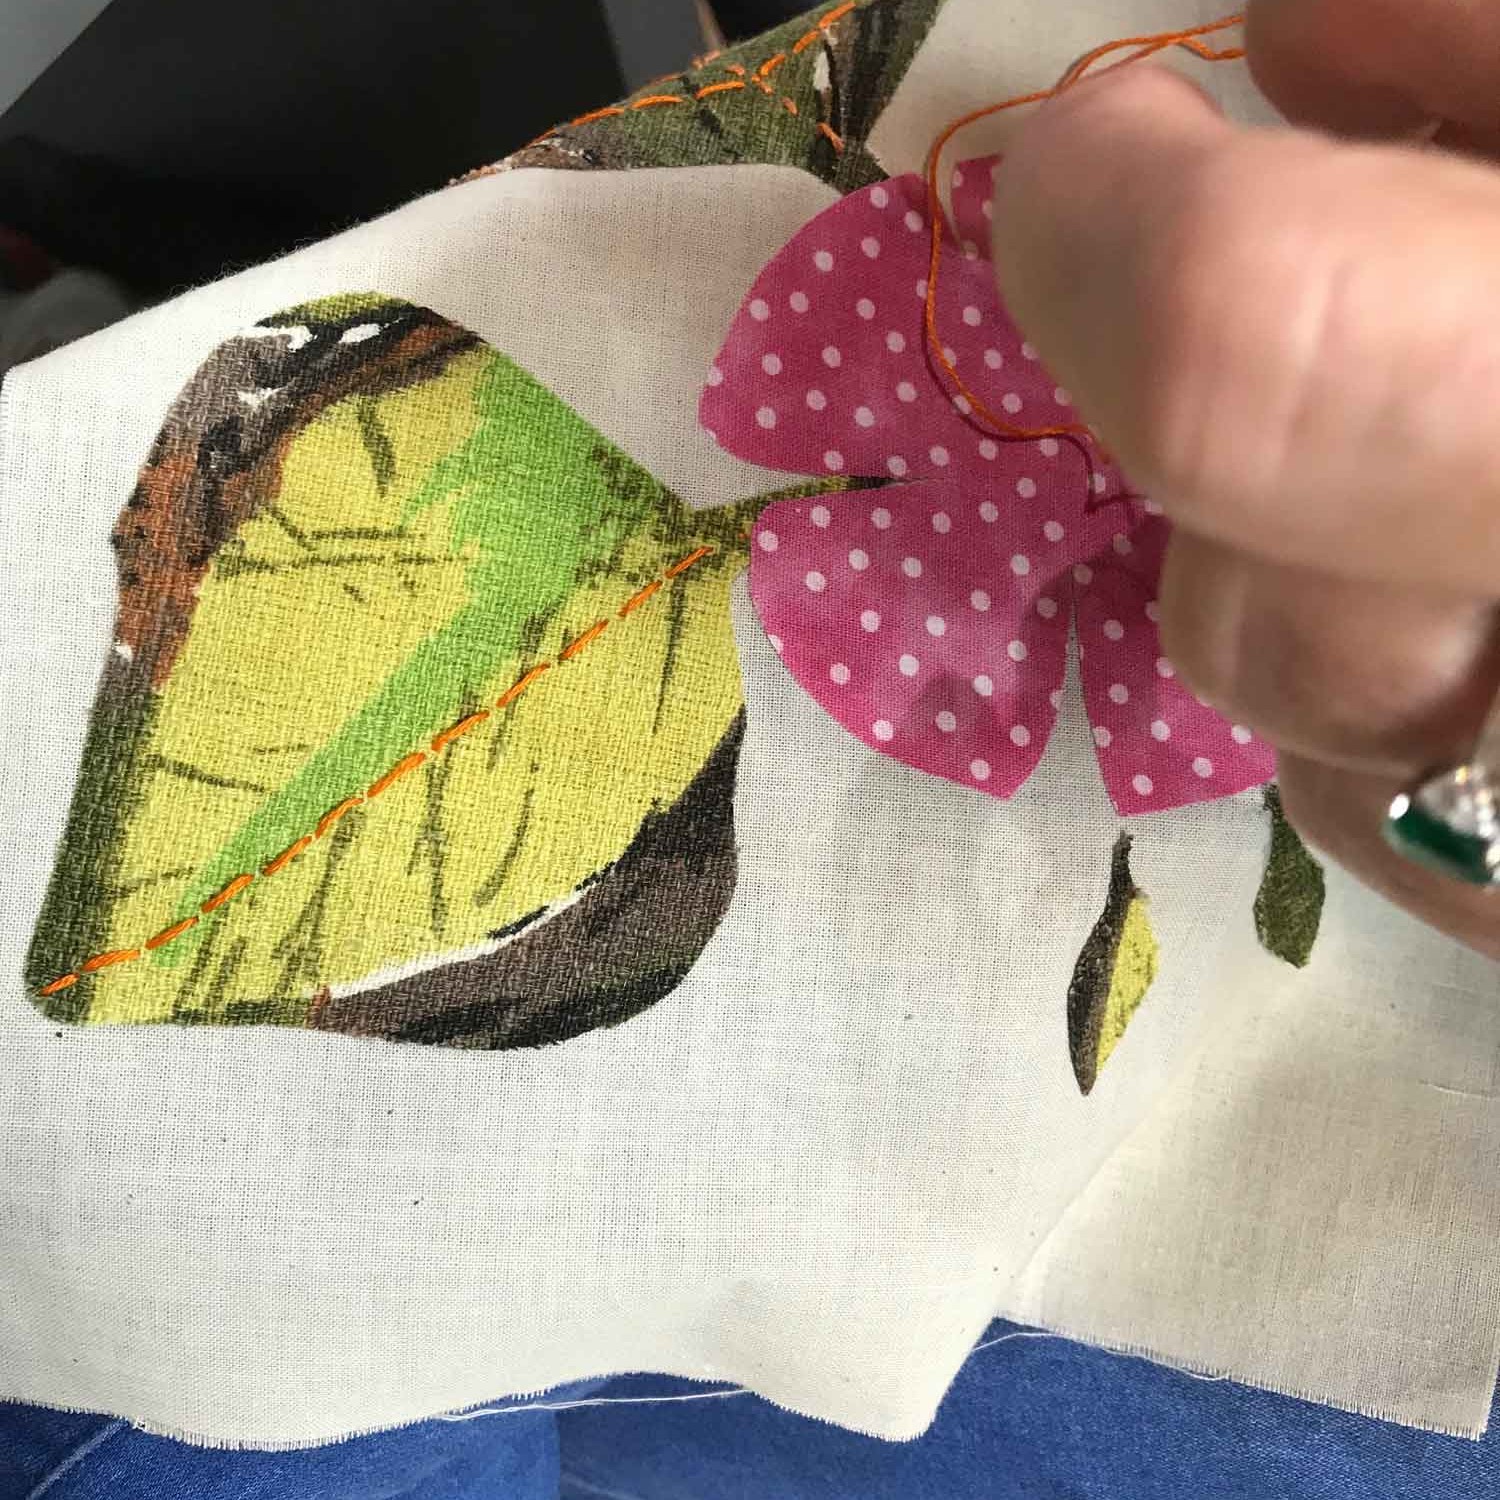 Stitching flowers to hessian